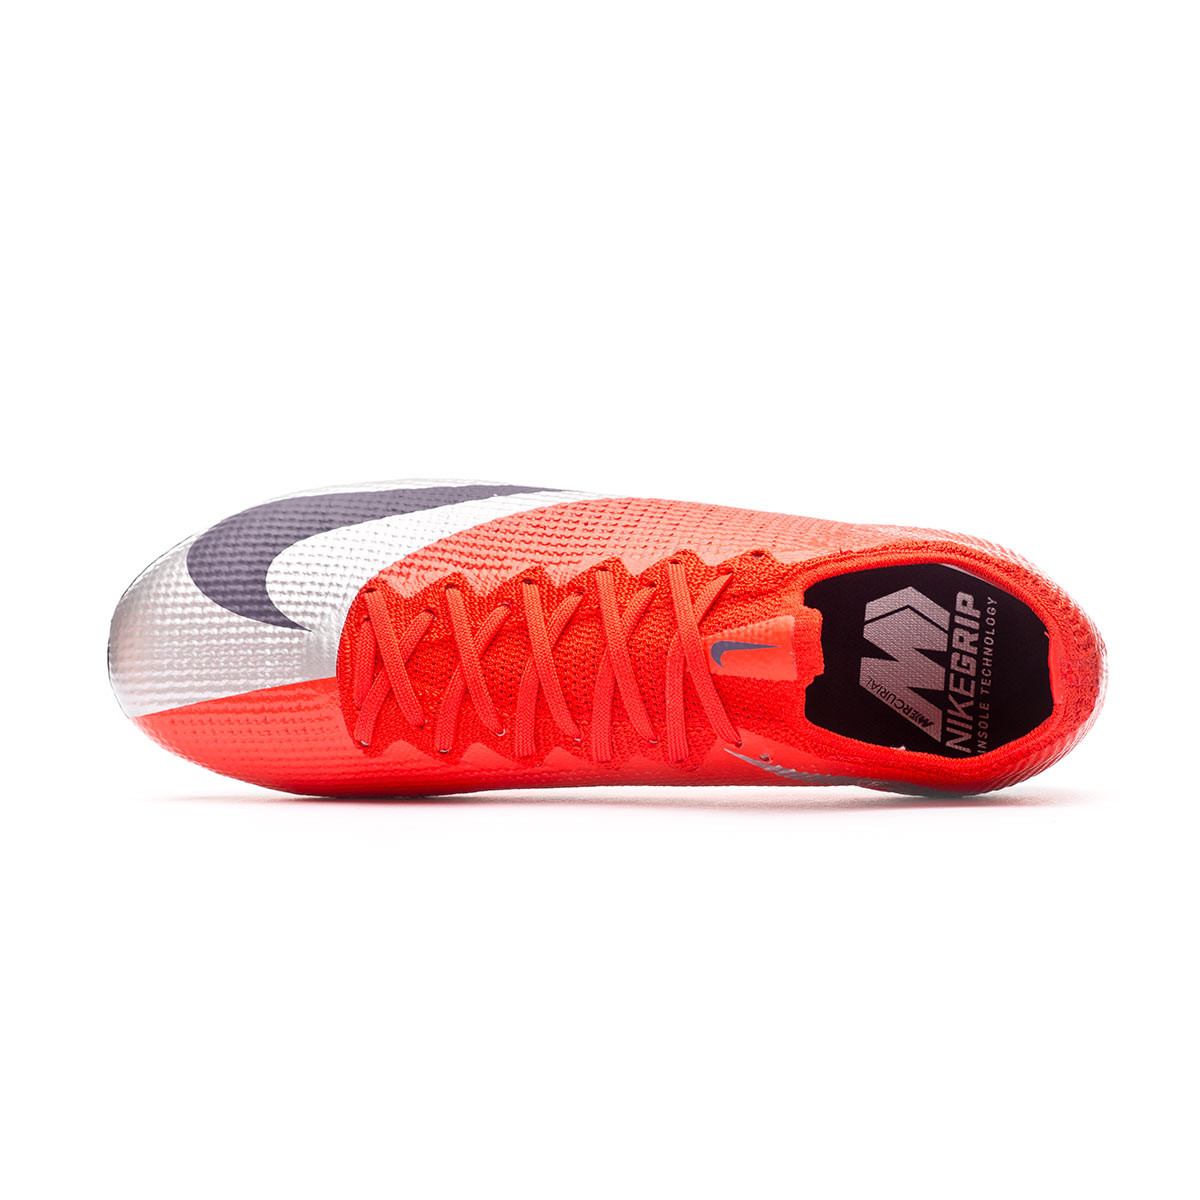 Nike Mercurial Superfly 7 Elite FG at 153.85 prezzo .Idealo